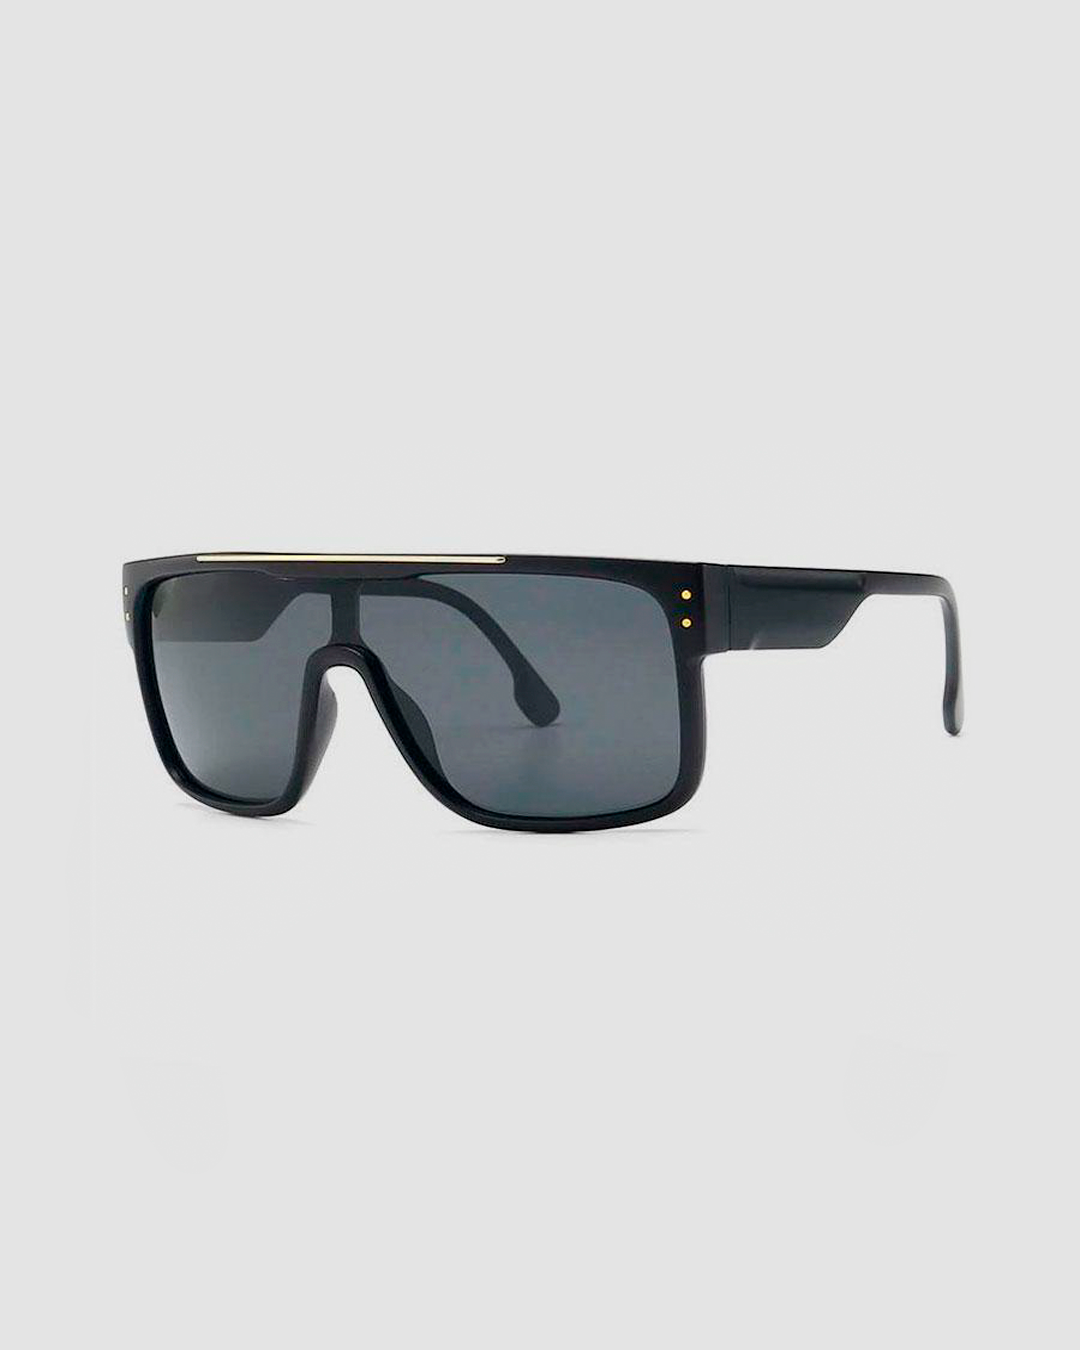 Stryker Sunglasses